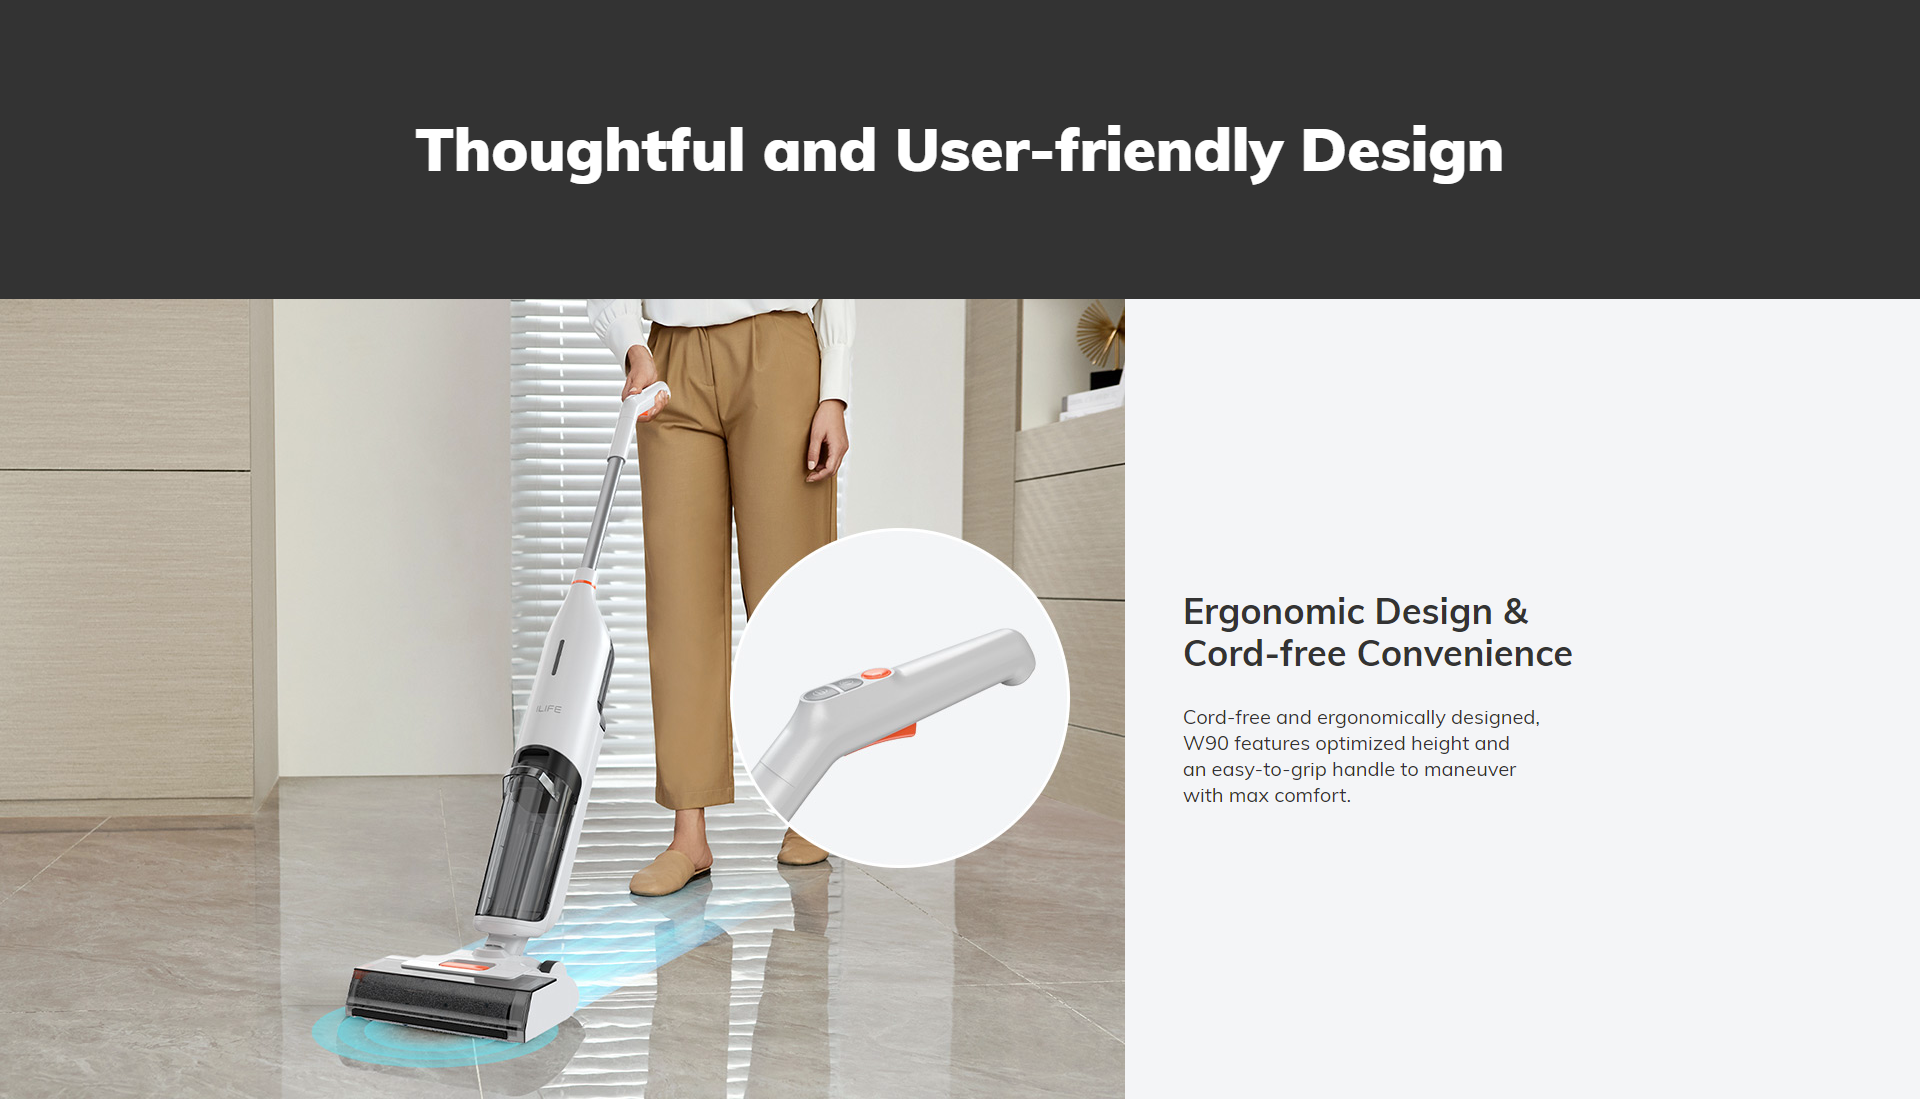 Ergonomic Design &
Cord-free Convenience